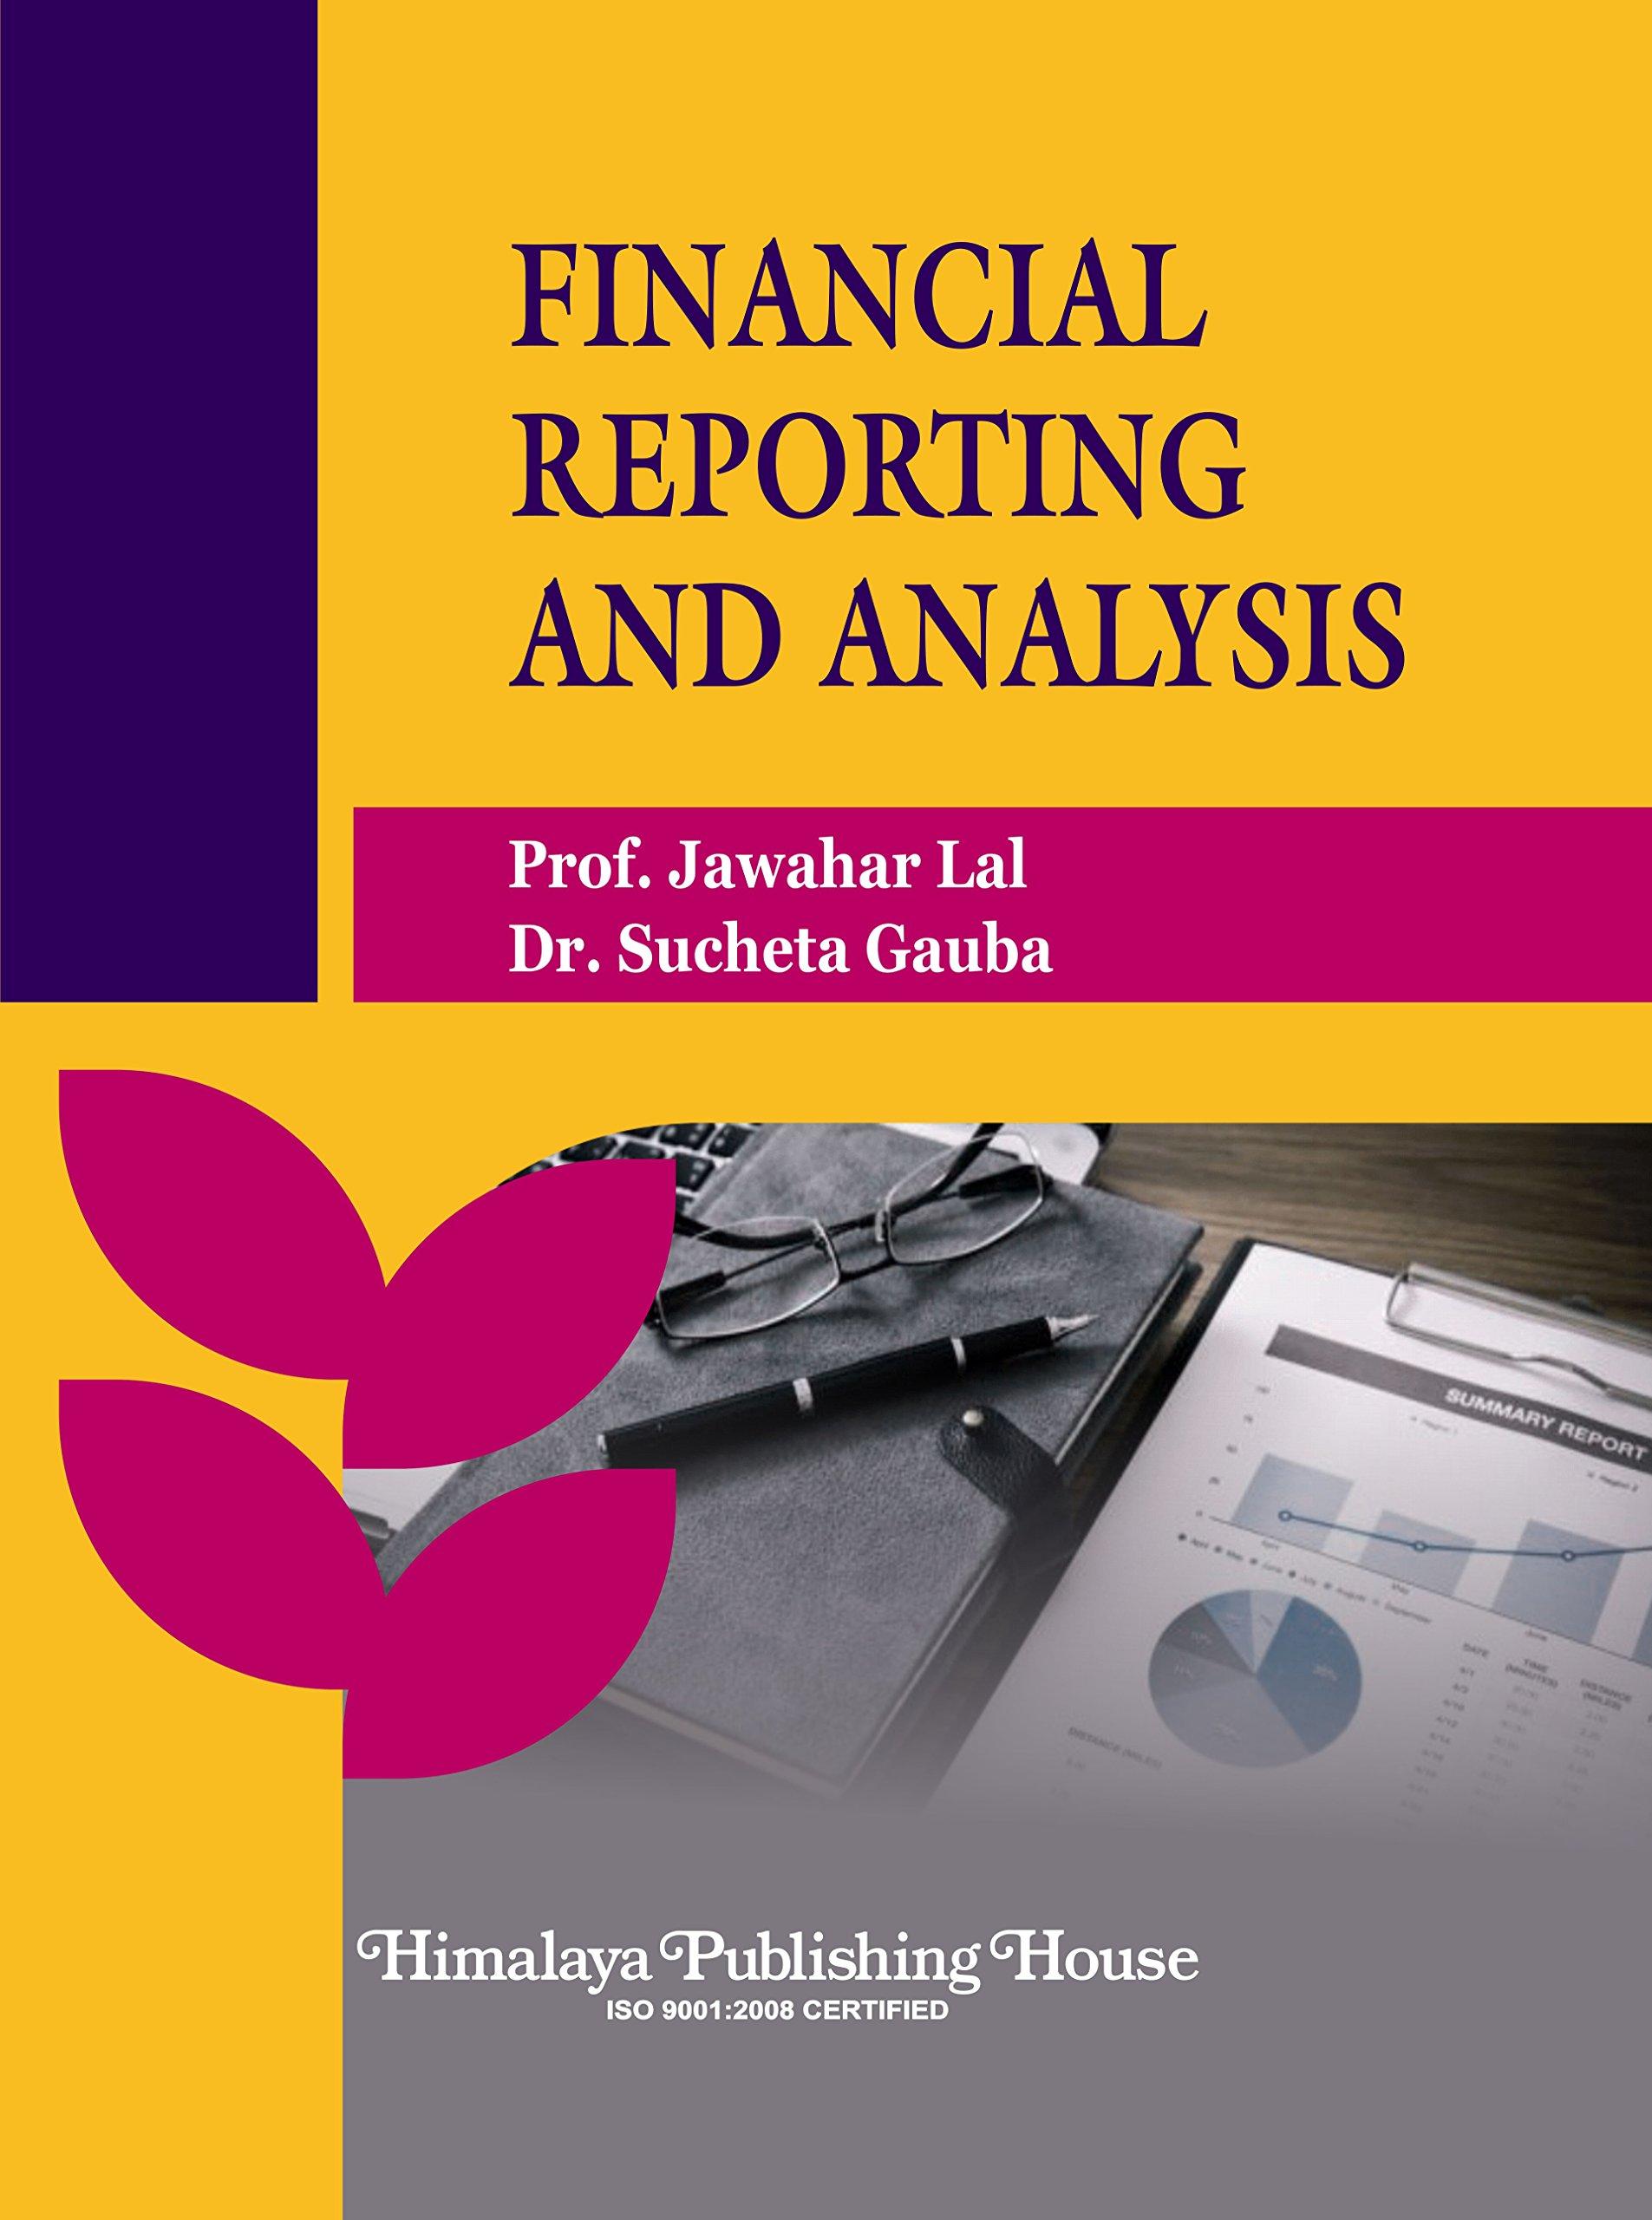 financial reporting and analysis 1st edition s. gauba, jawahar lal 9352739124, 978-9352739127